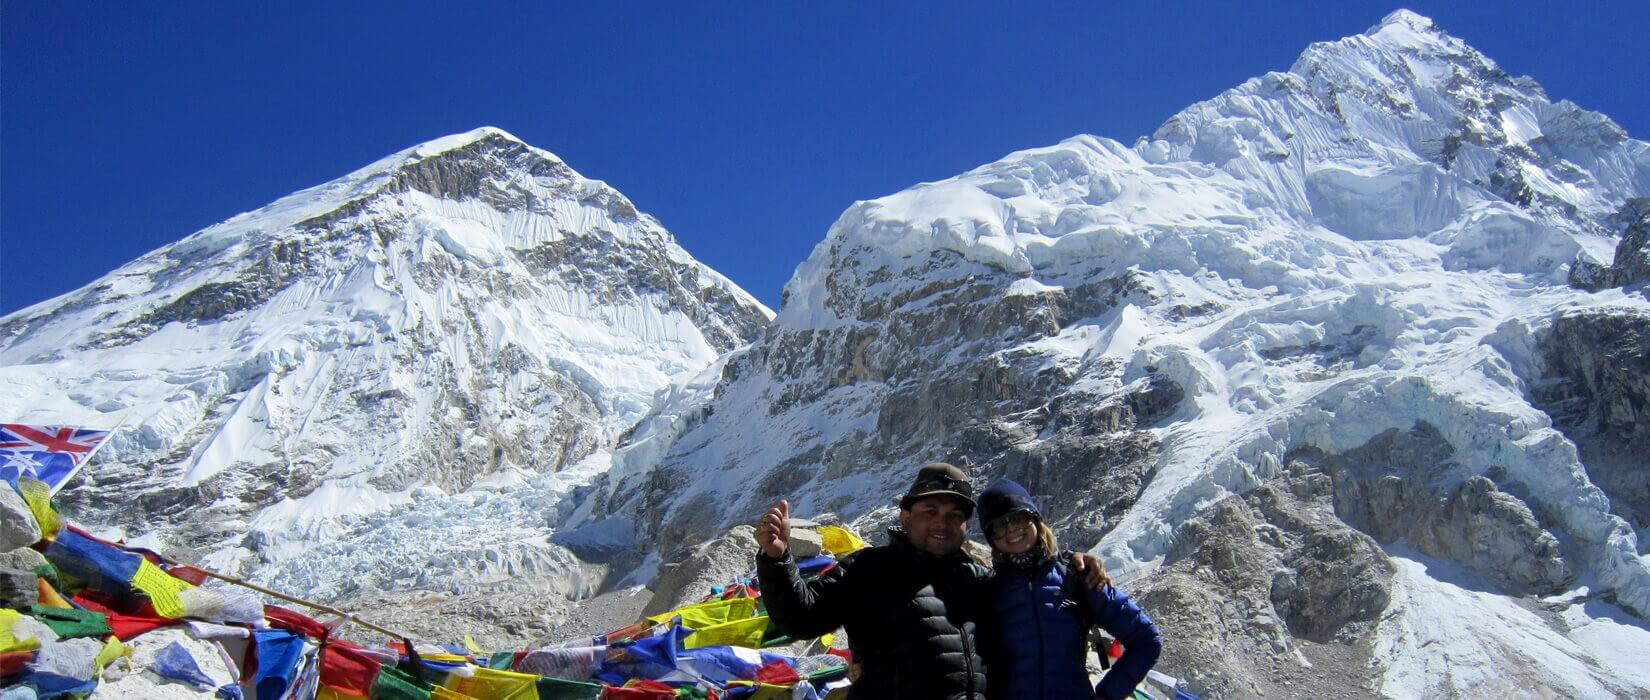 Everest Base Camp - 5,364 M